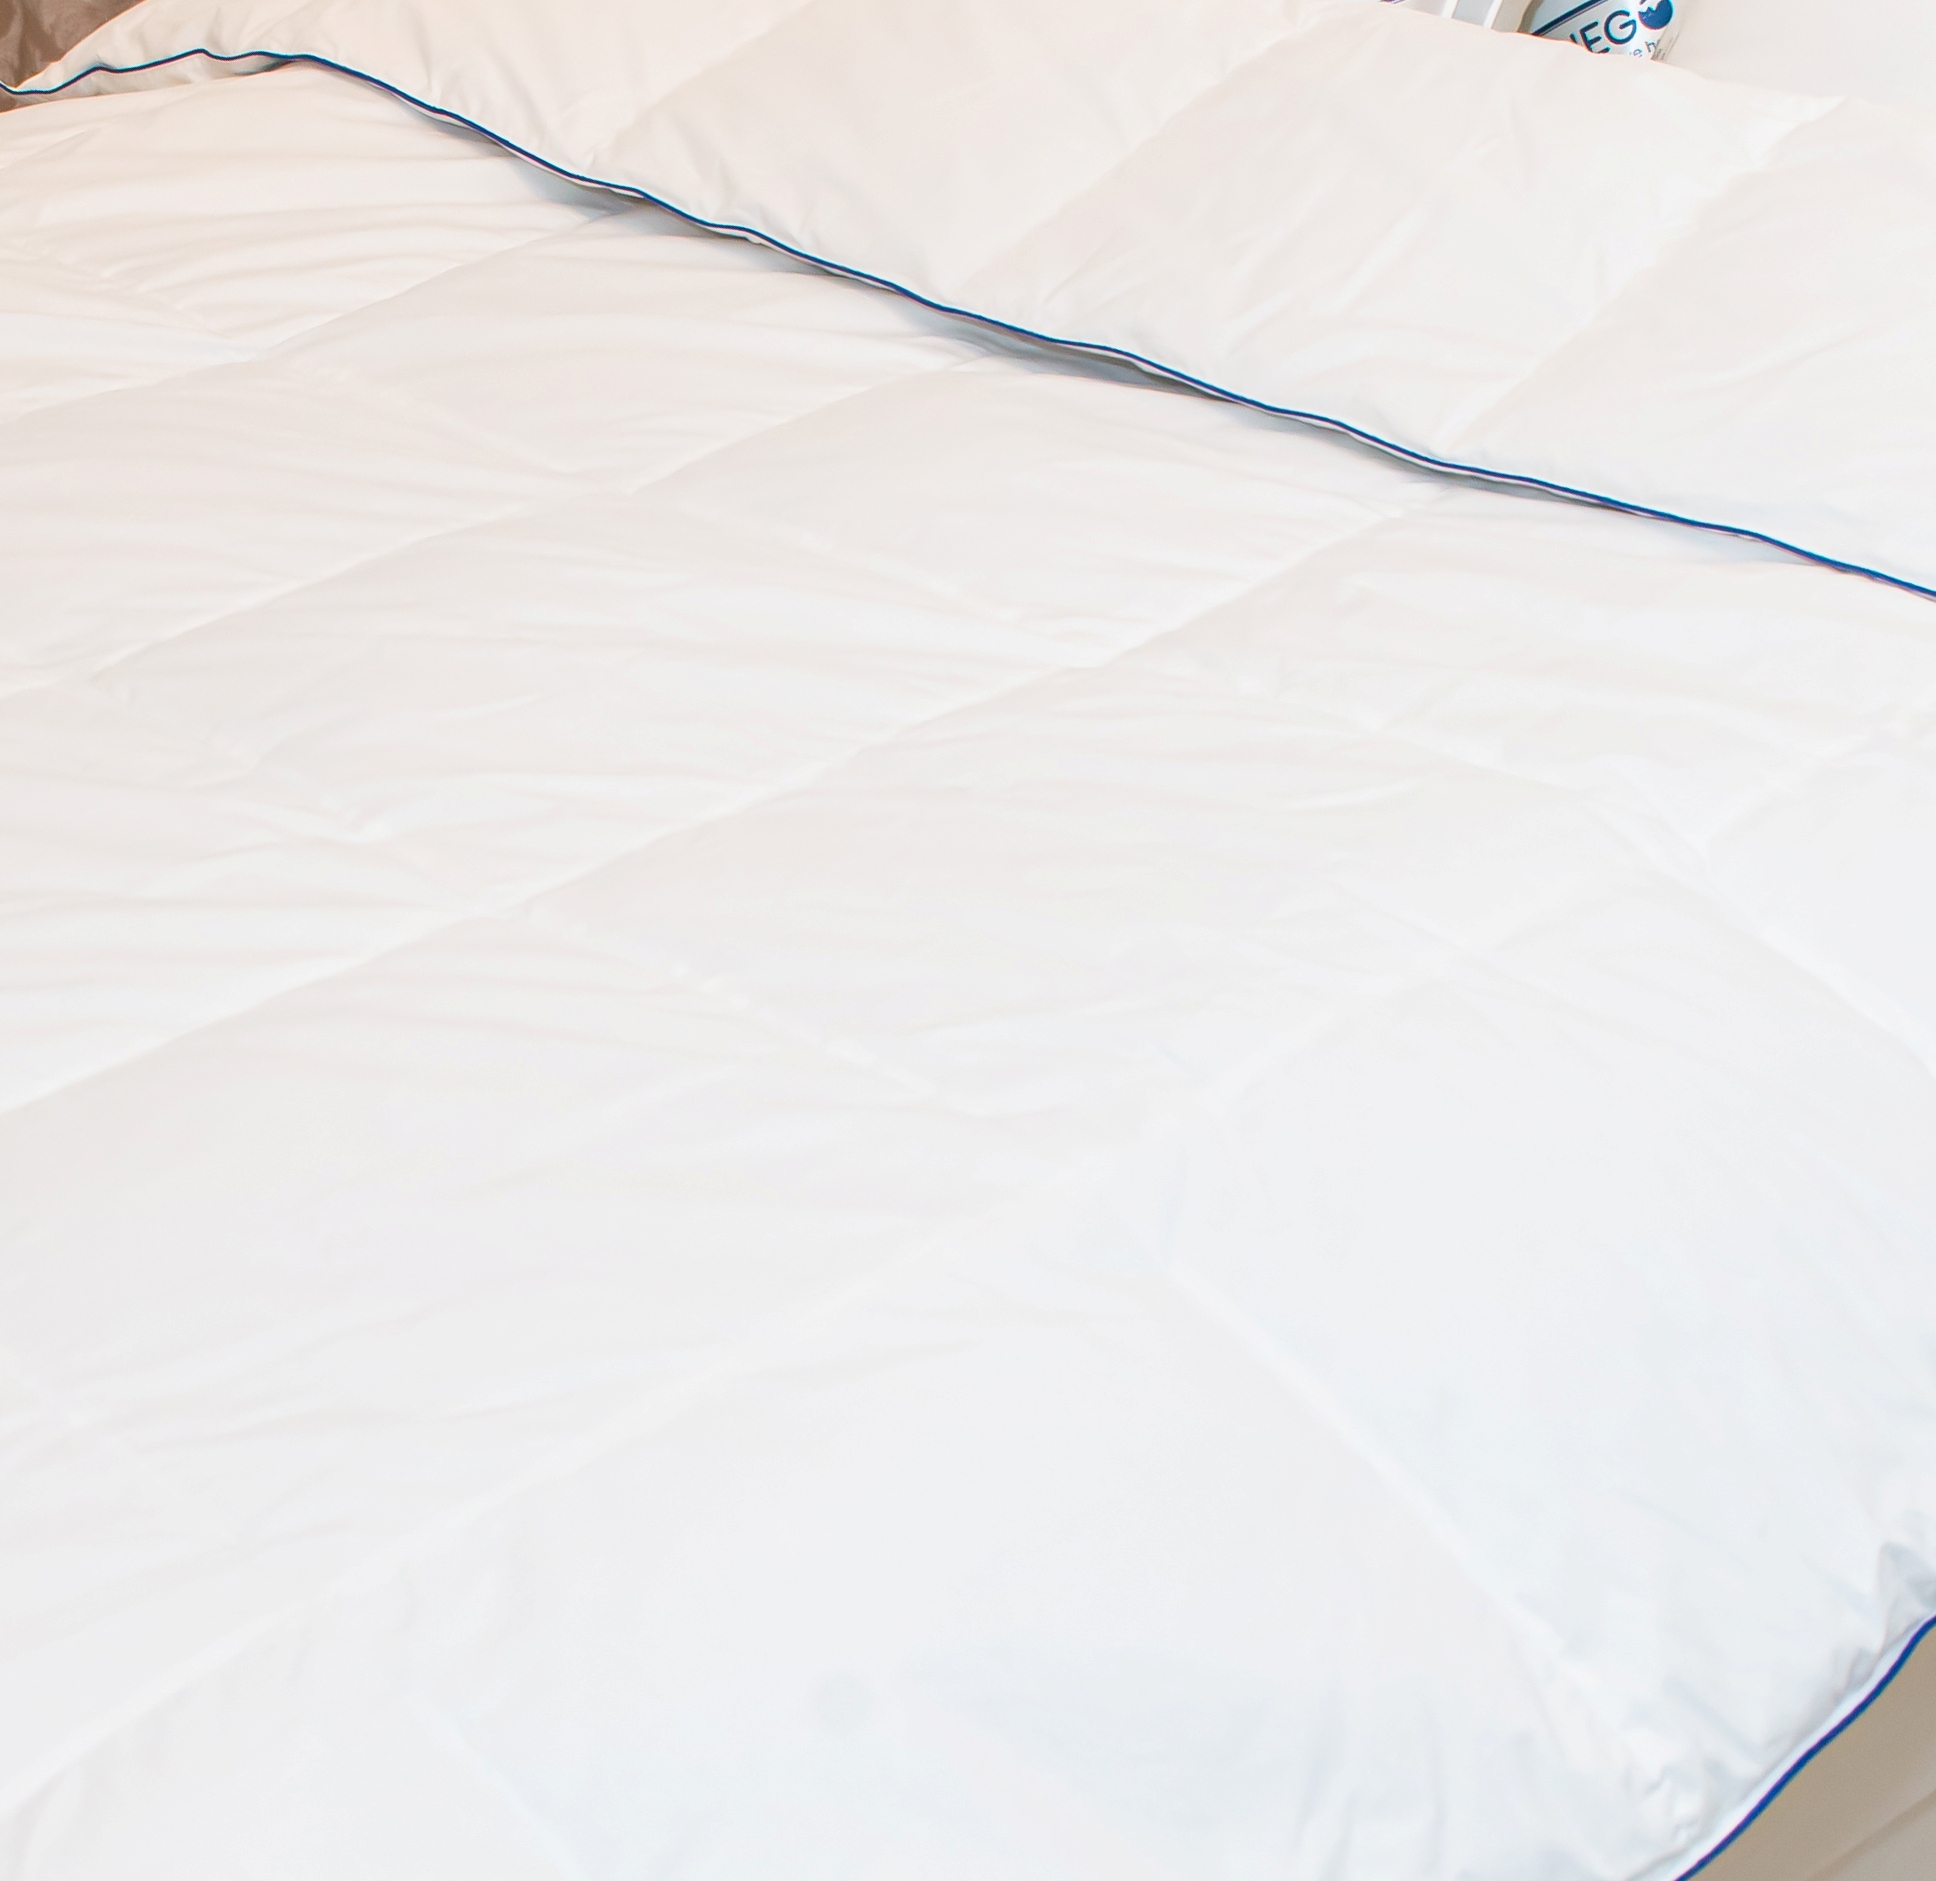 фото Одеяло вега пуховое 200х200 размер икея, зимнее, теплое, пушистое diego